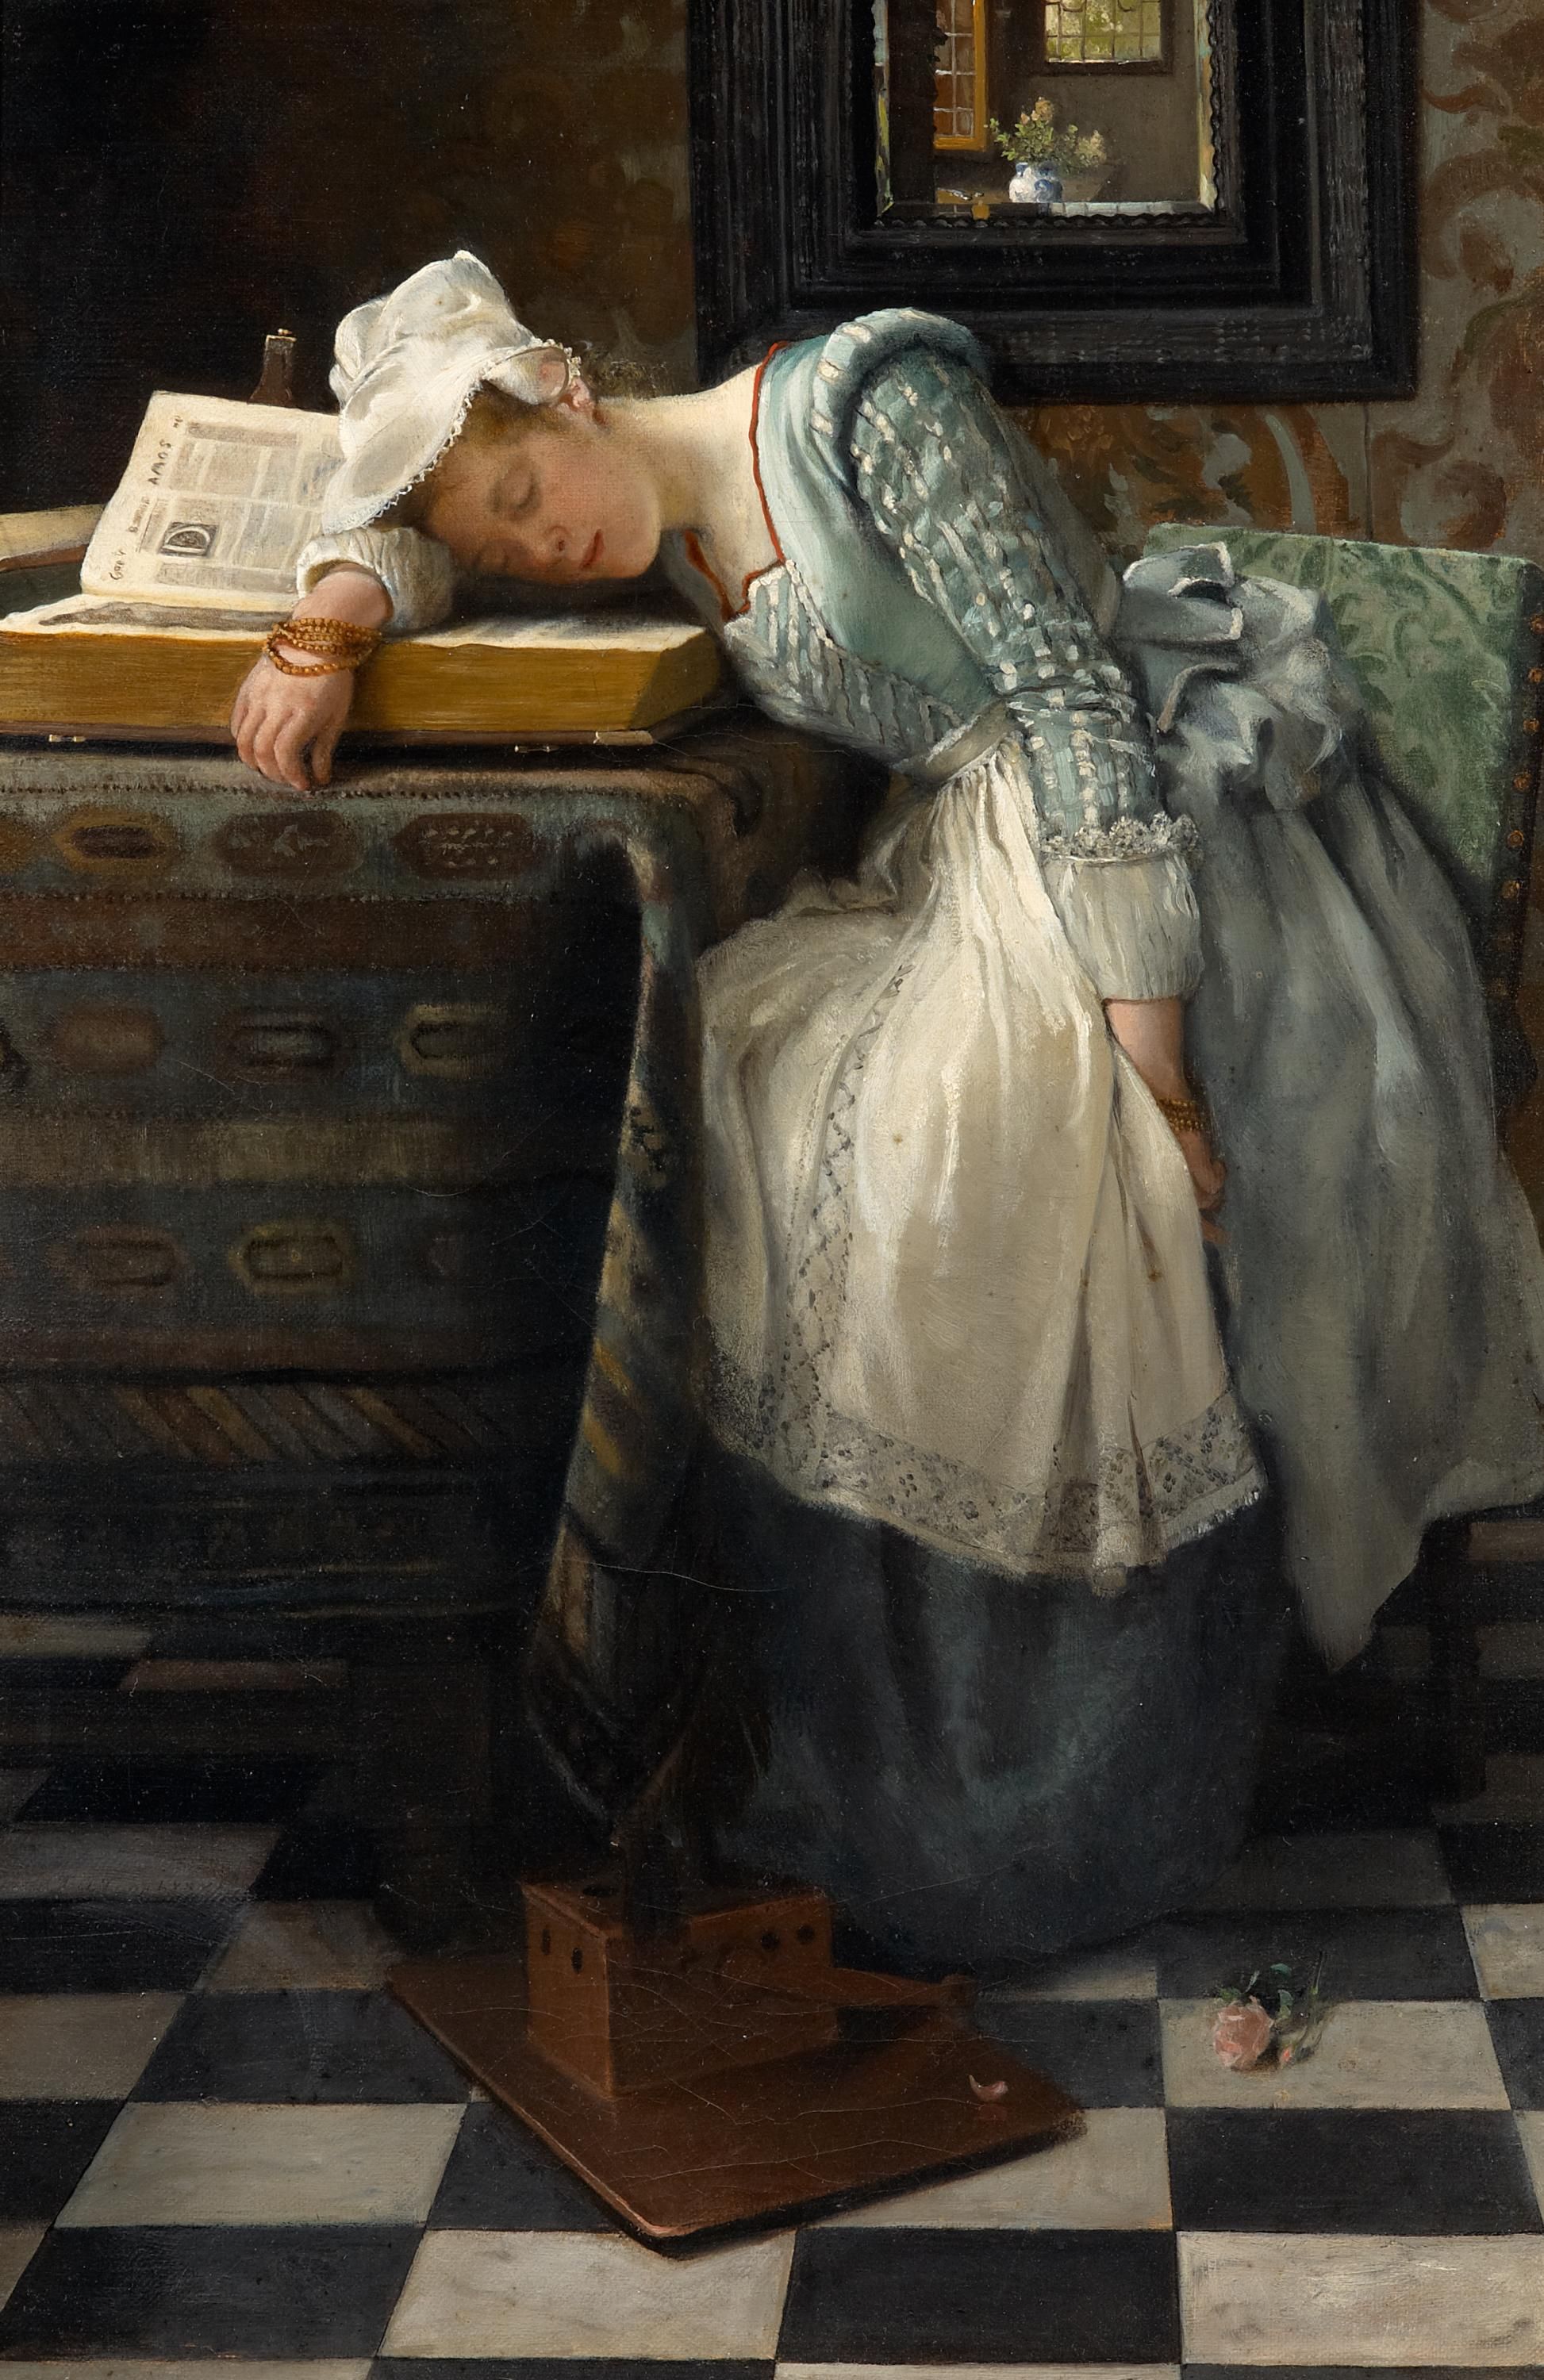 夢境的世界 by Laura Theresa Alma Tadema - 1876 - 46 x 31 cm 